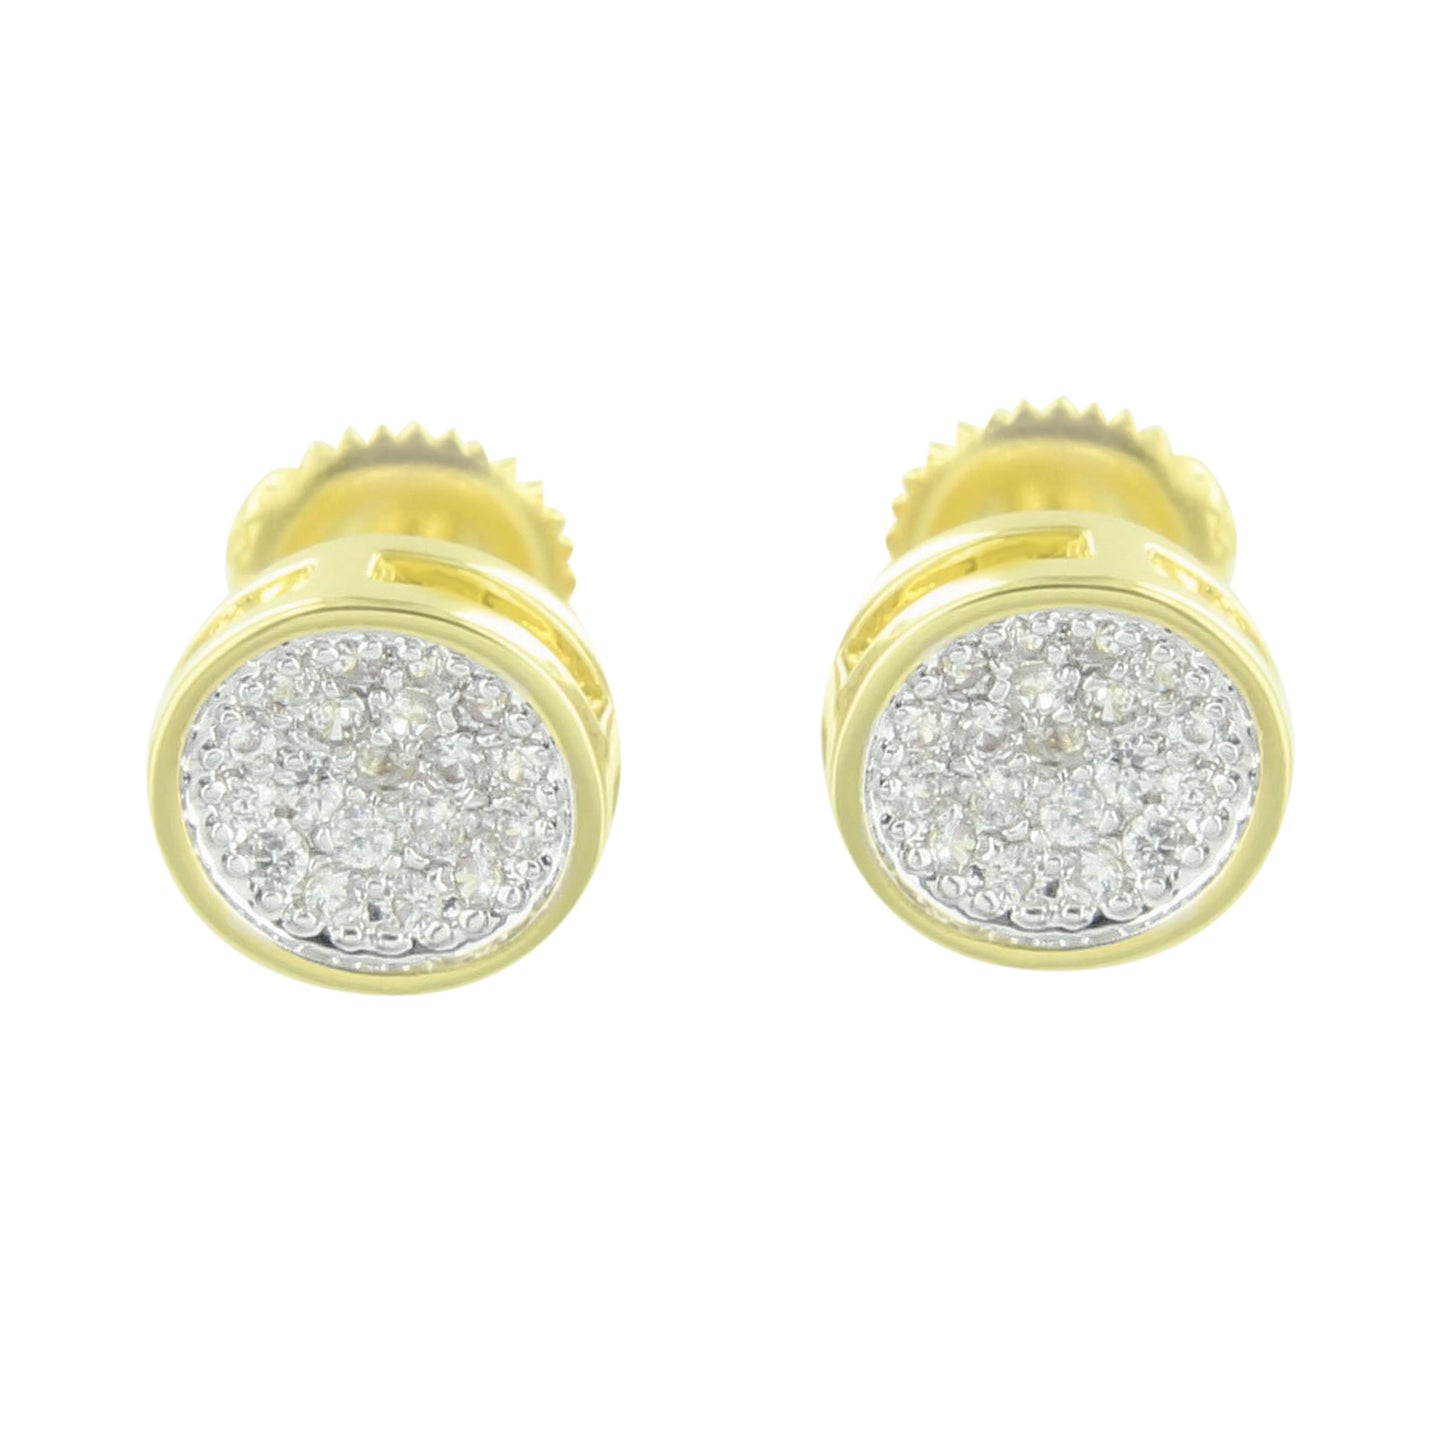 Gold Finish Earrings Round Stylish Simulated Diamonds Cluster Set